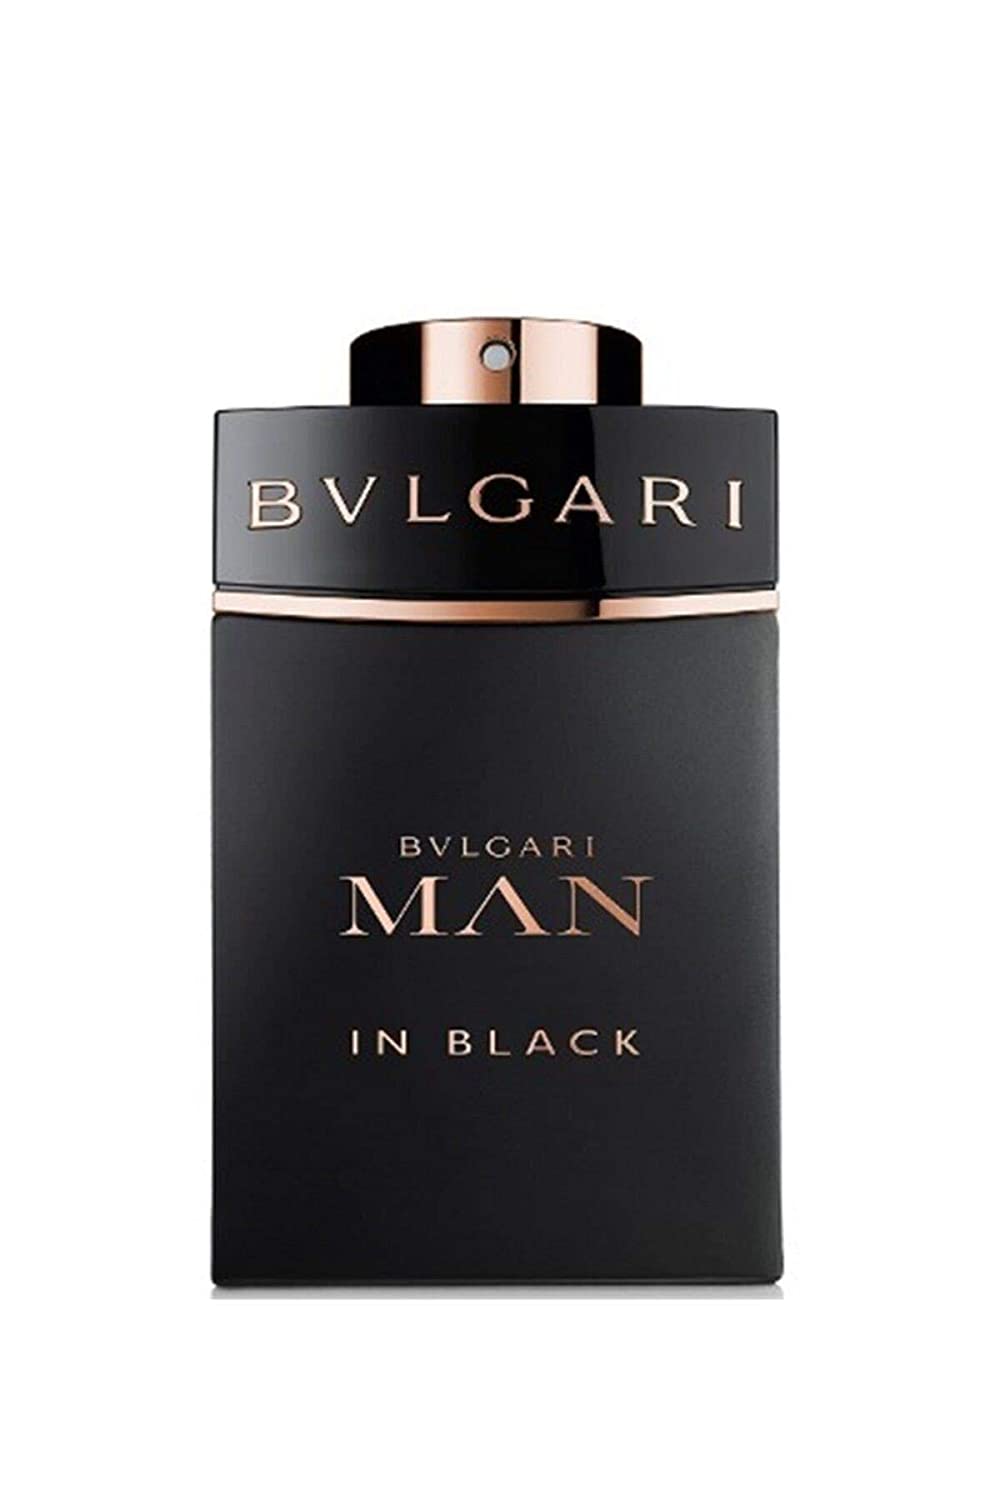 Bvlgari Man In Black for Men